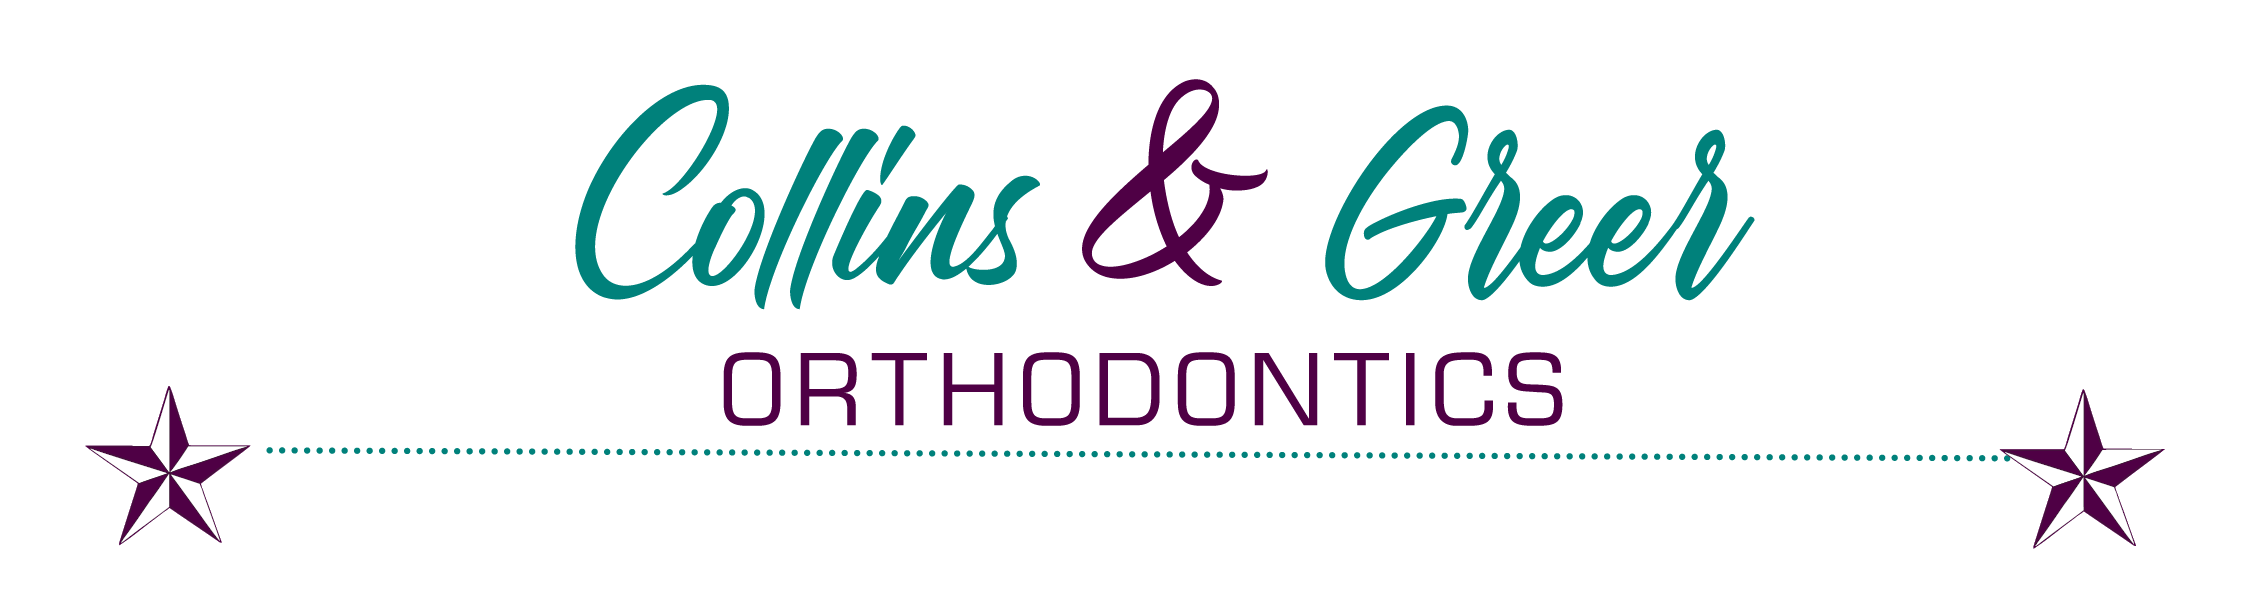 Collins and Team Orthodontics